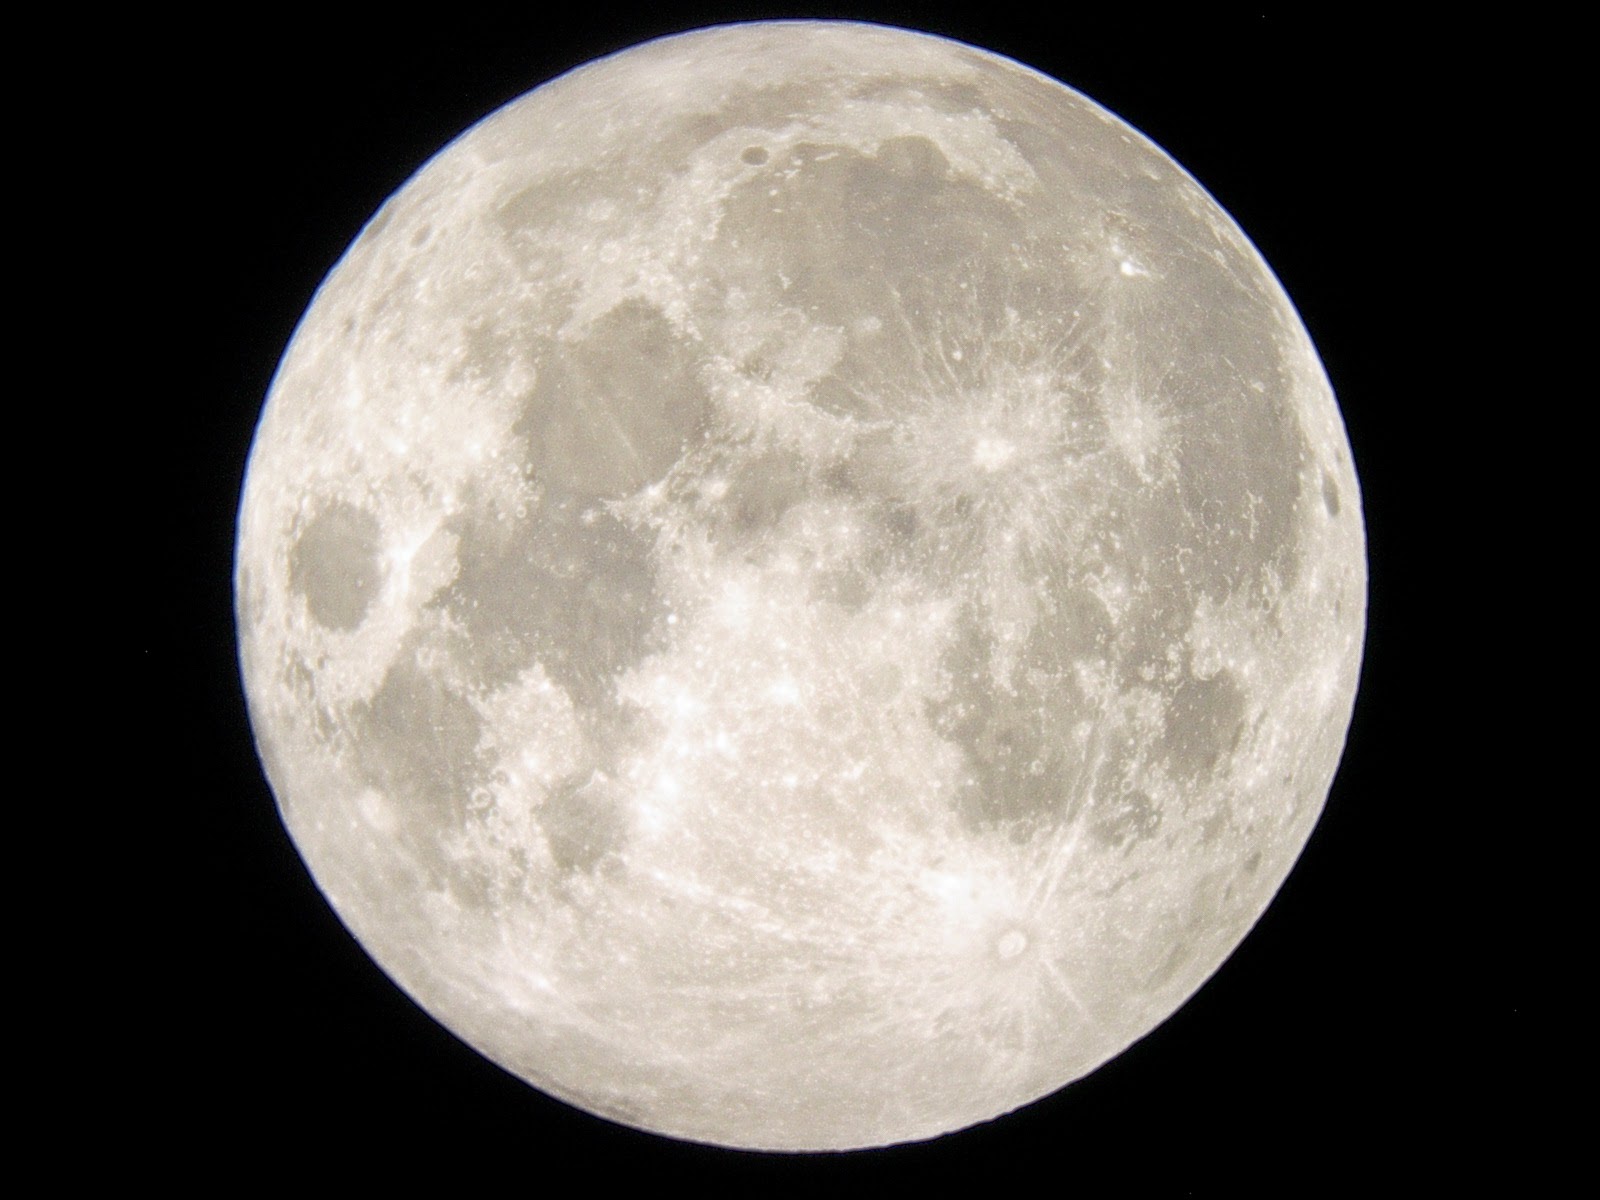 permukaan bulan yang selalu menghadap bumi selalu sama. hal tersebut disebabkan karena